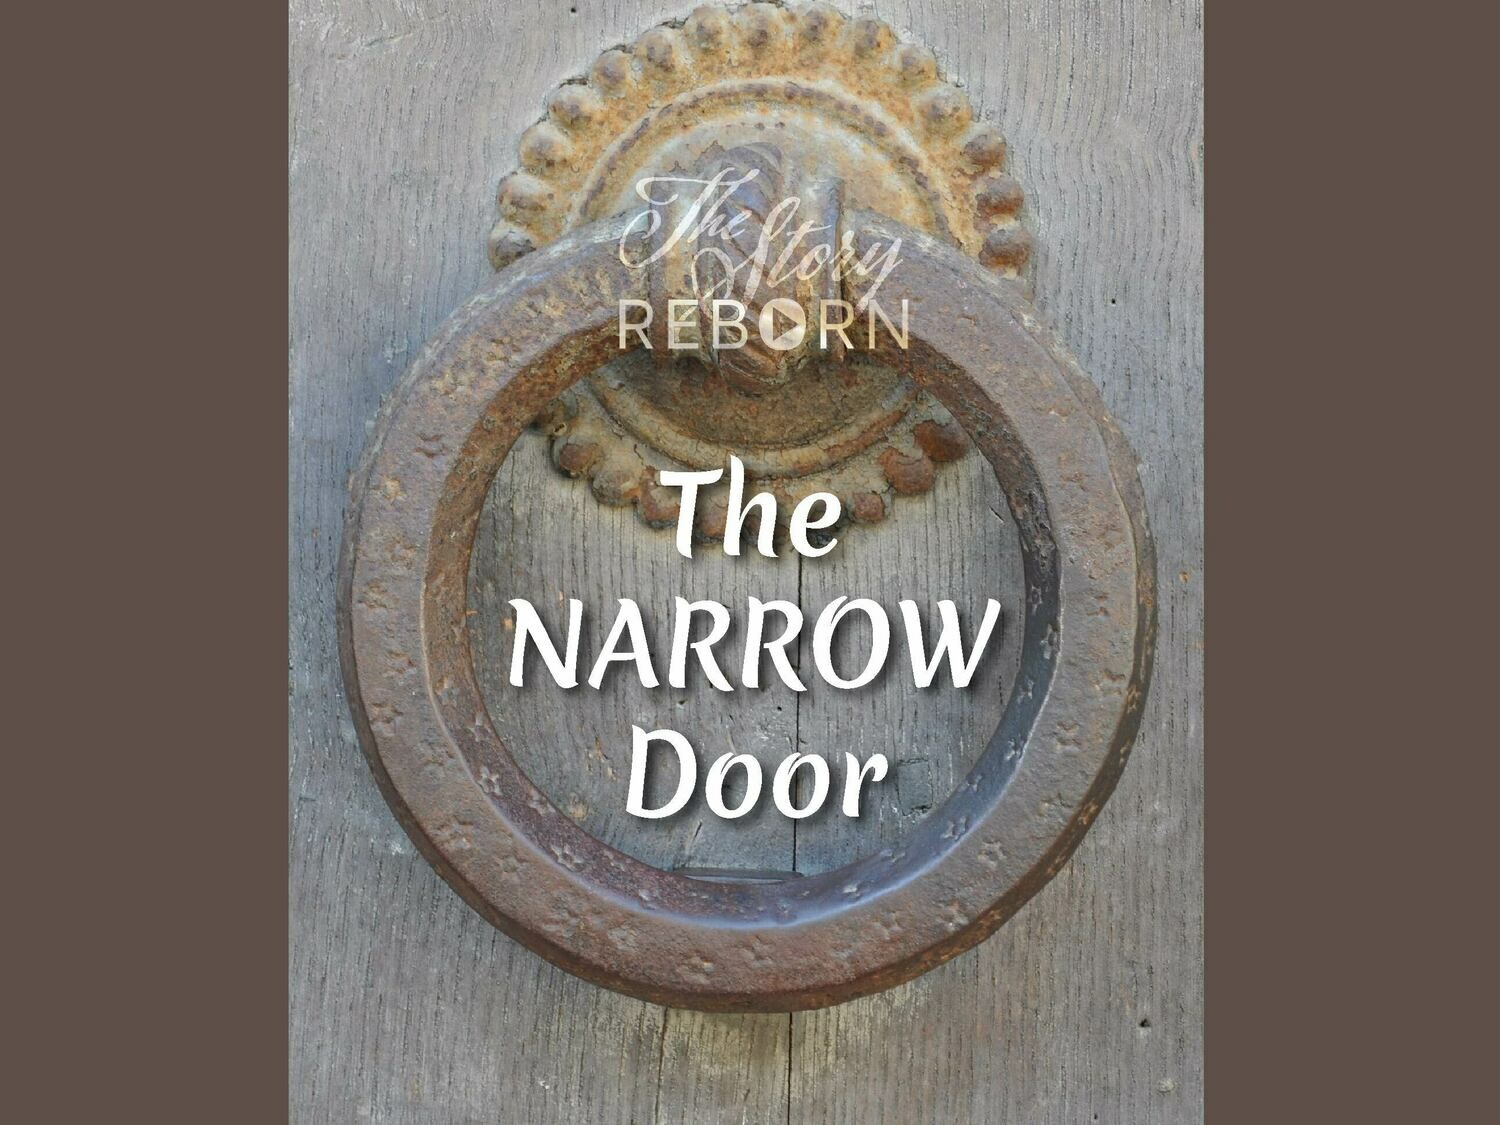 The Story - The Narrow Door